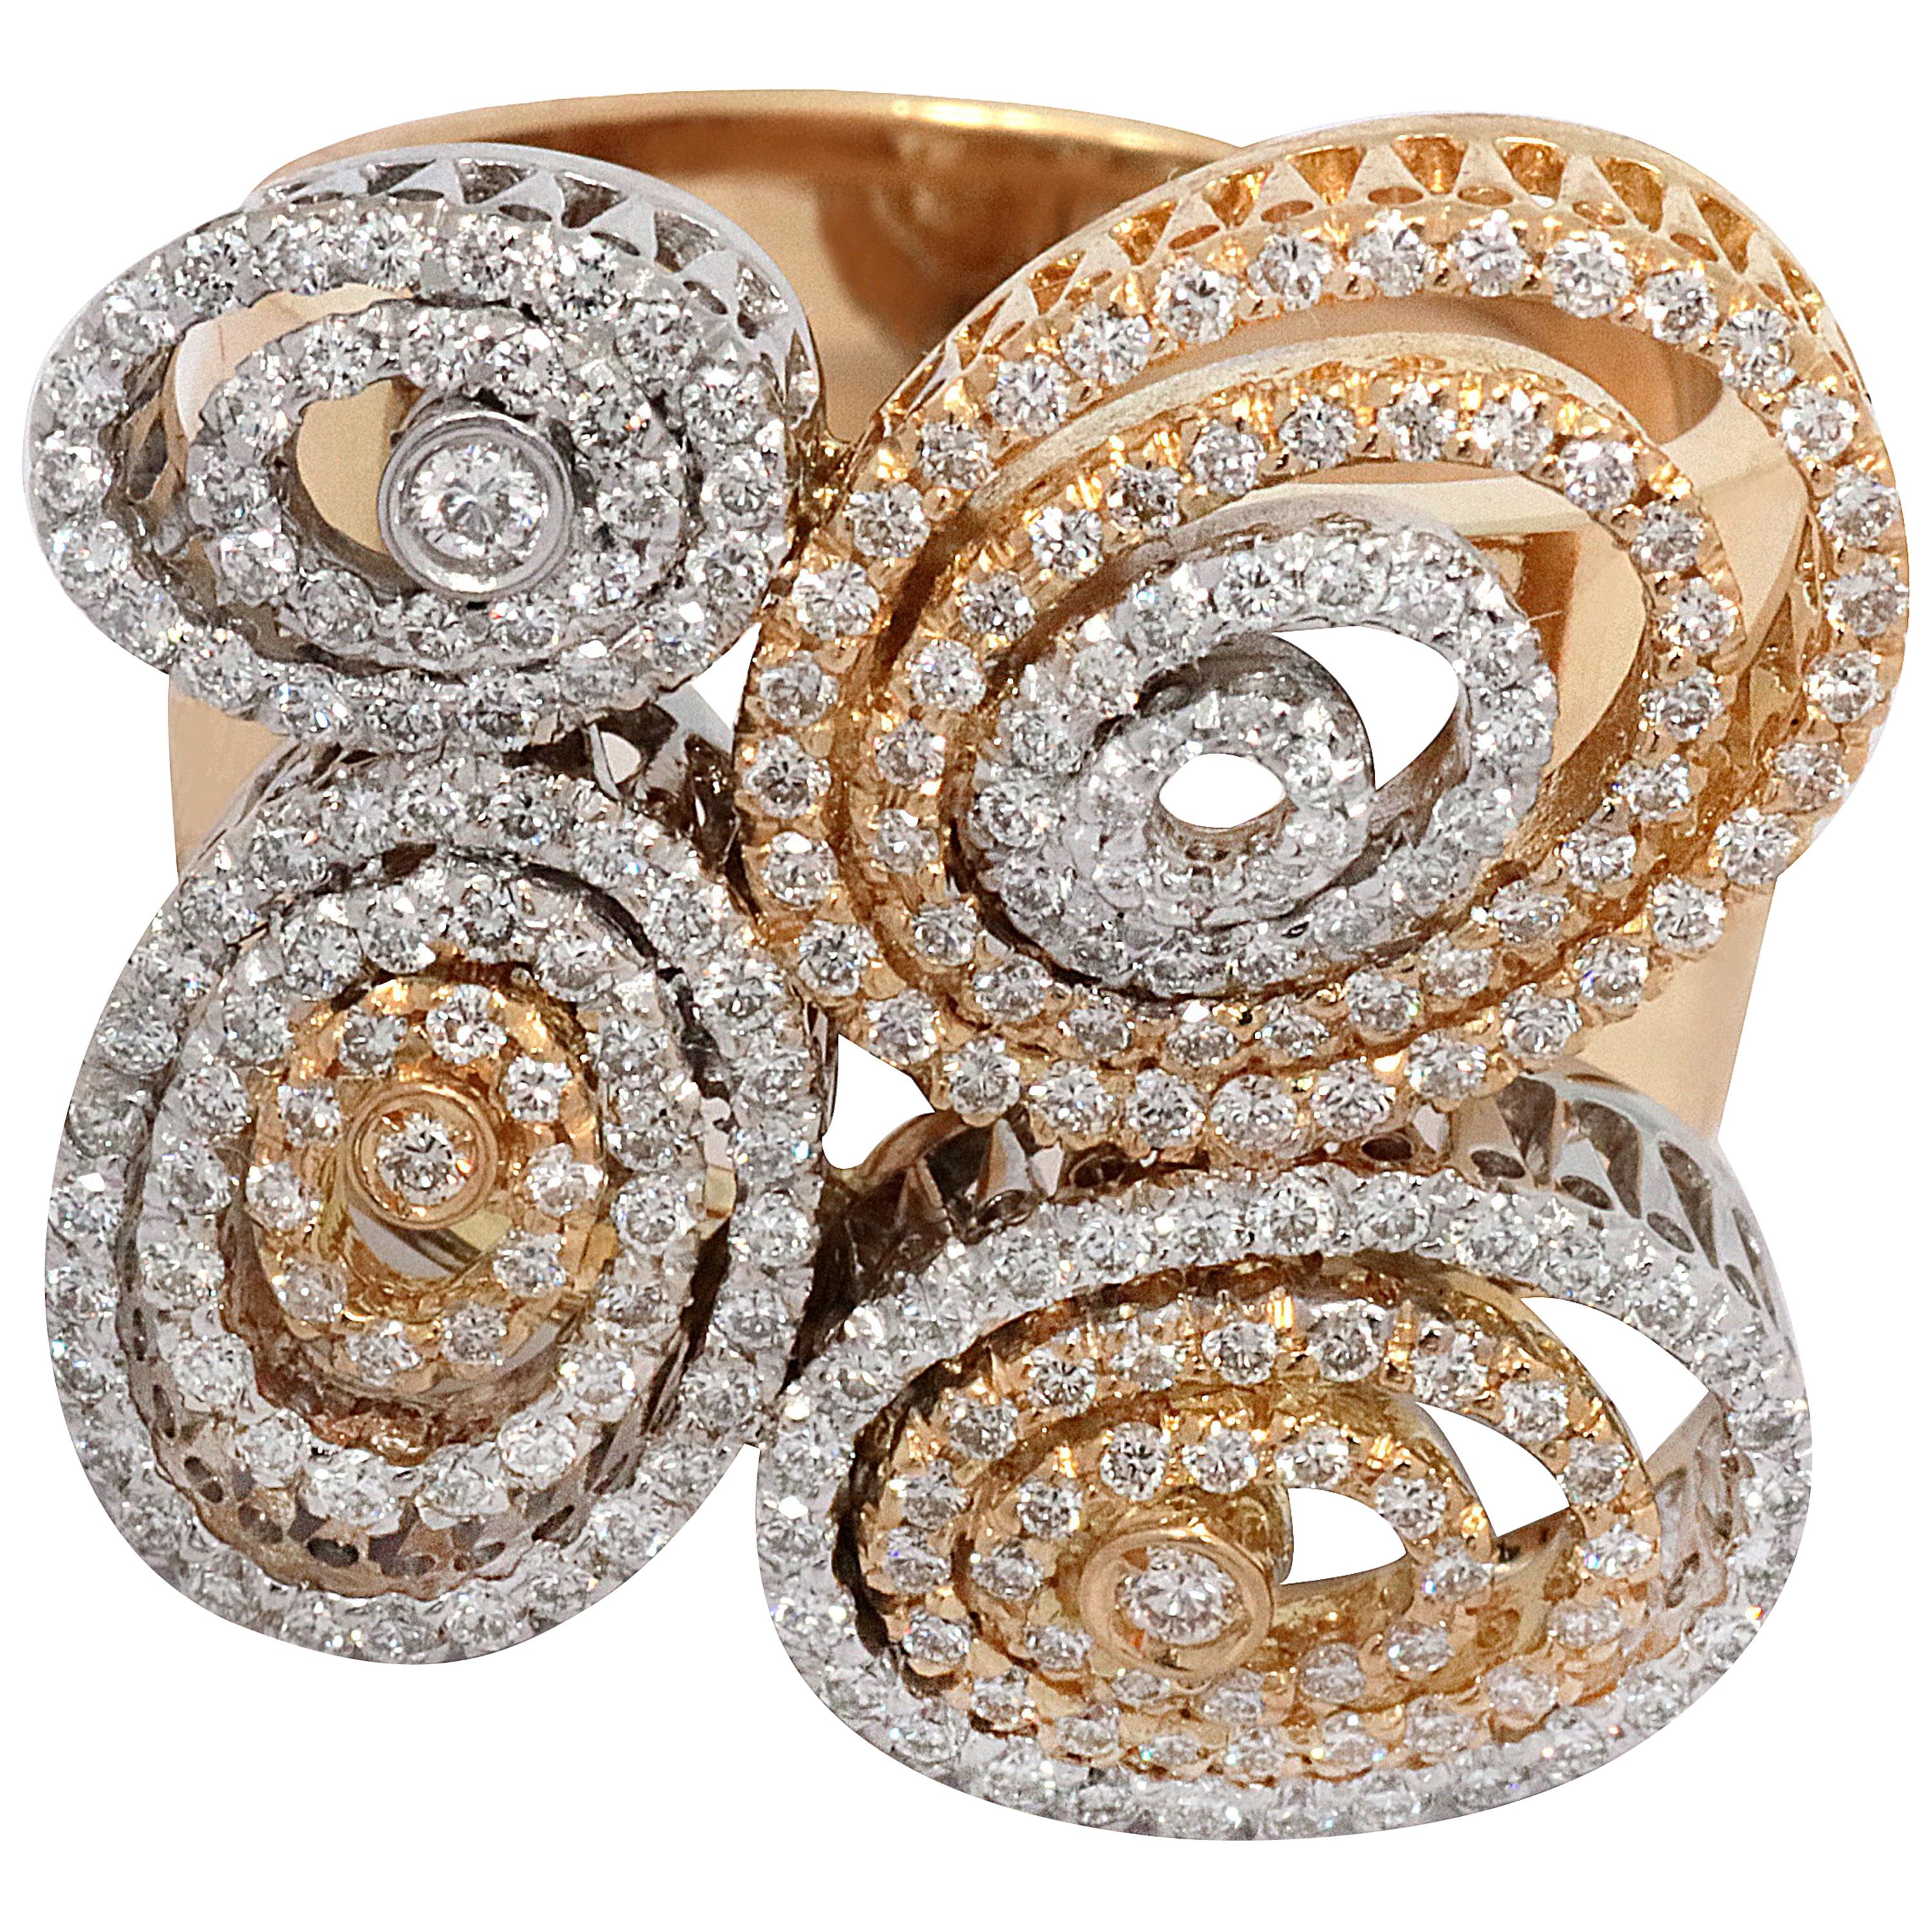 Ponte Vecchio Gioielli 18 Karat Gold Diamond Cocktail Ring For Sale